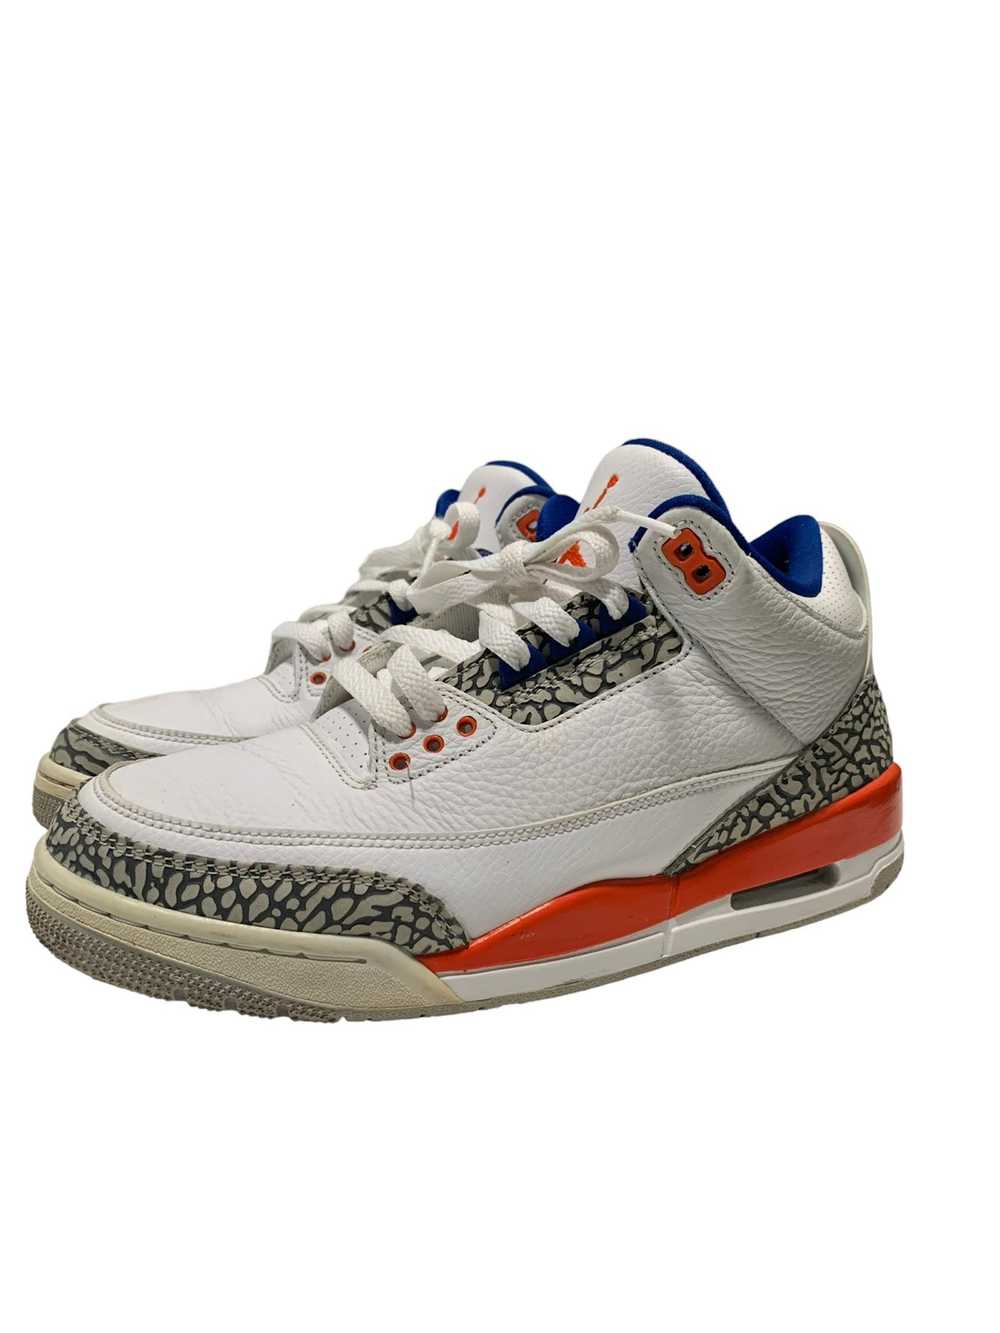 Jordan Brand Air Jordan 3 Retro 'Knicks' - image 2